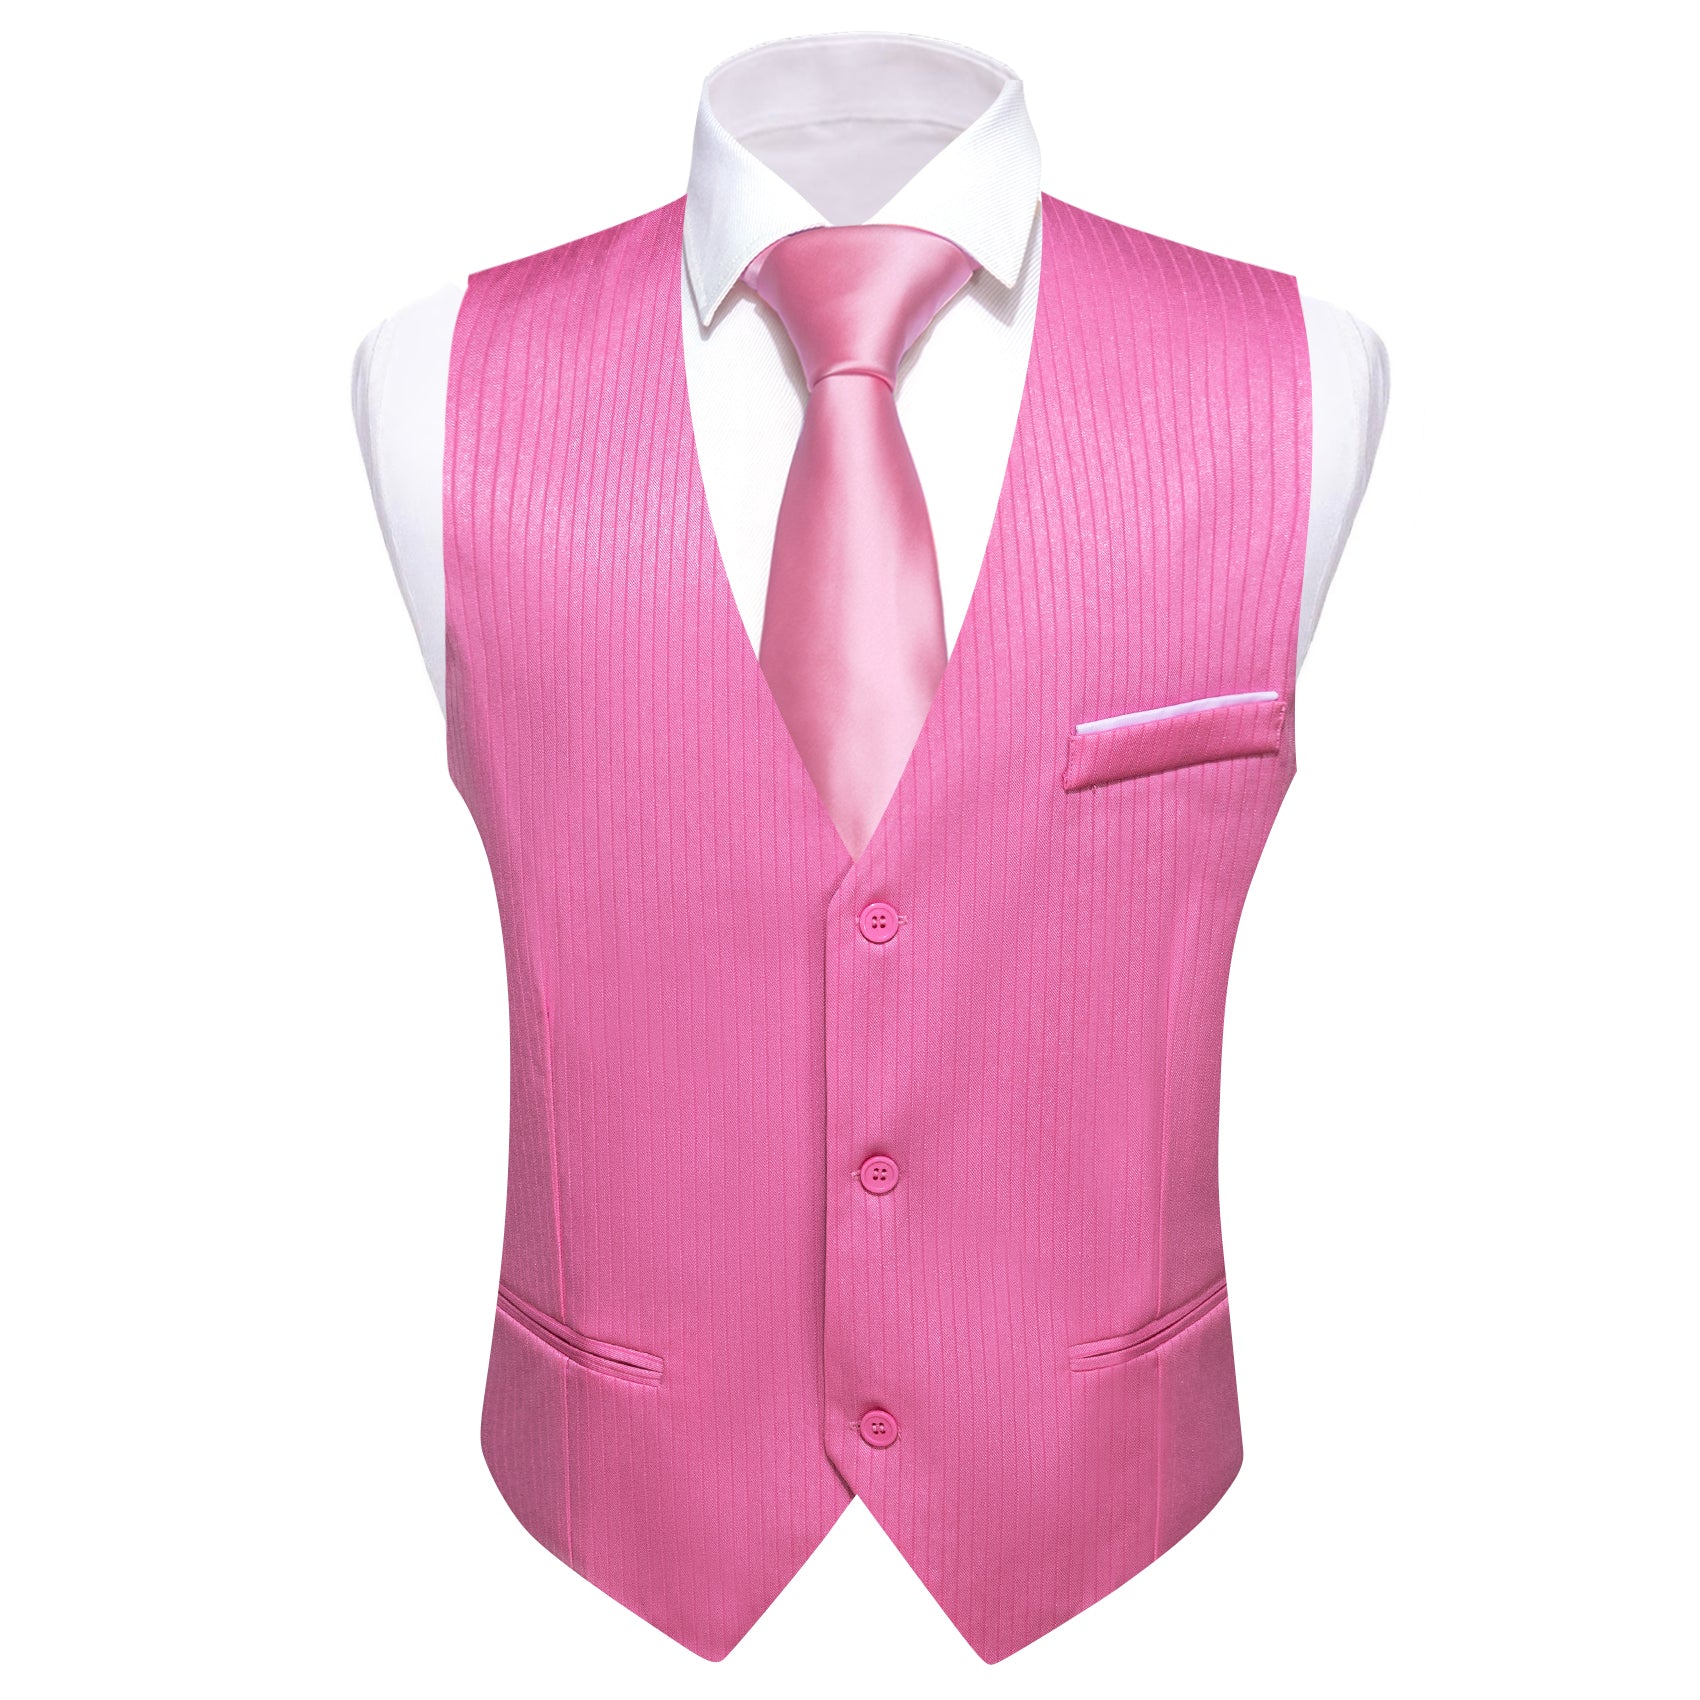 Barry.wang lilac Solid Business Vest Suit